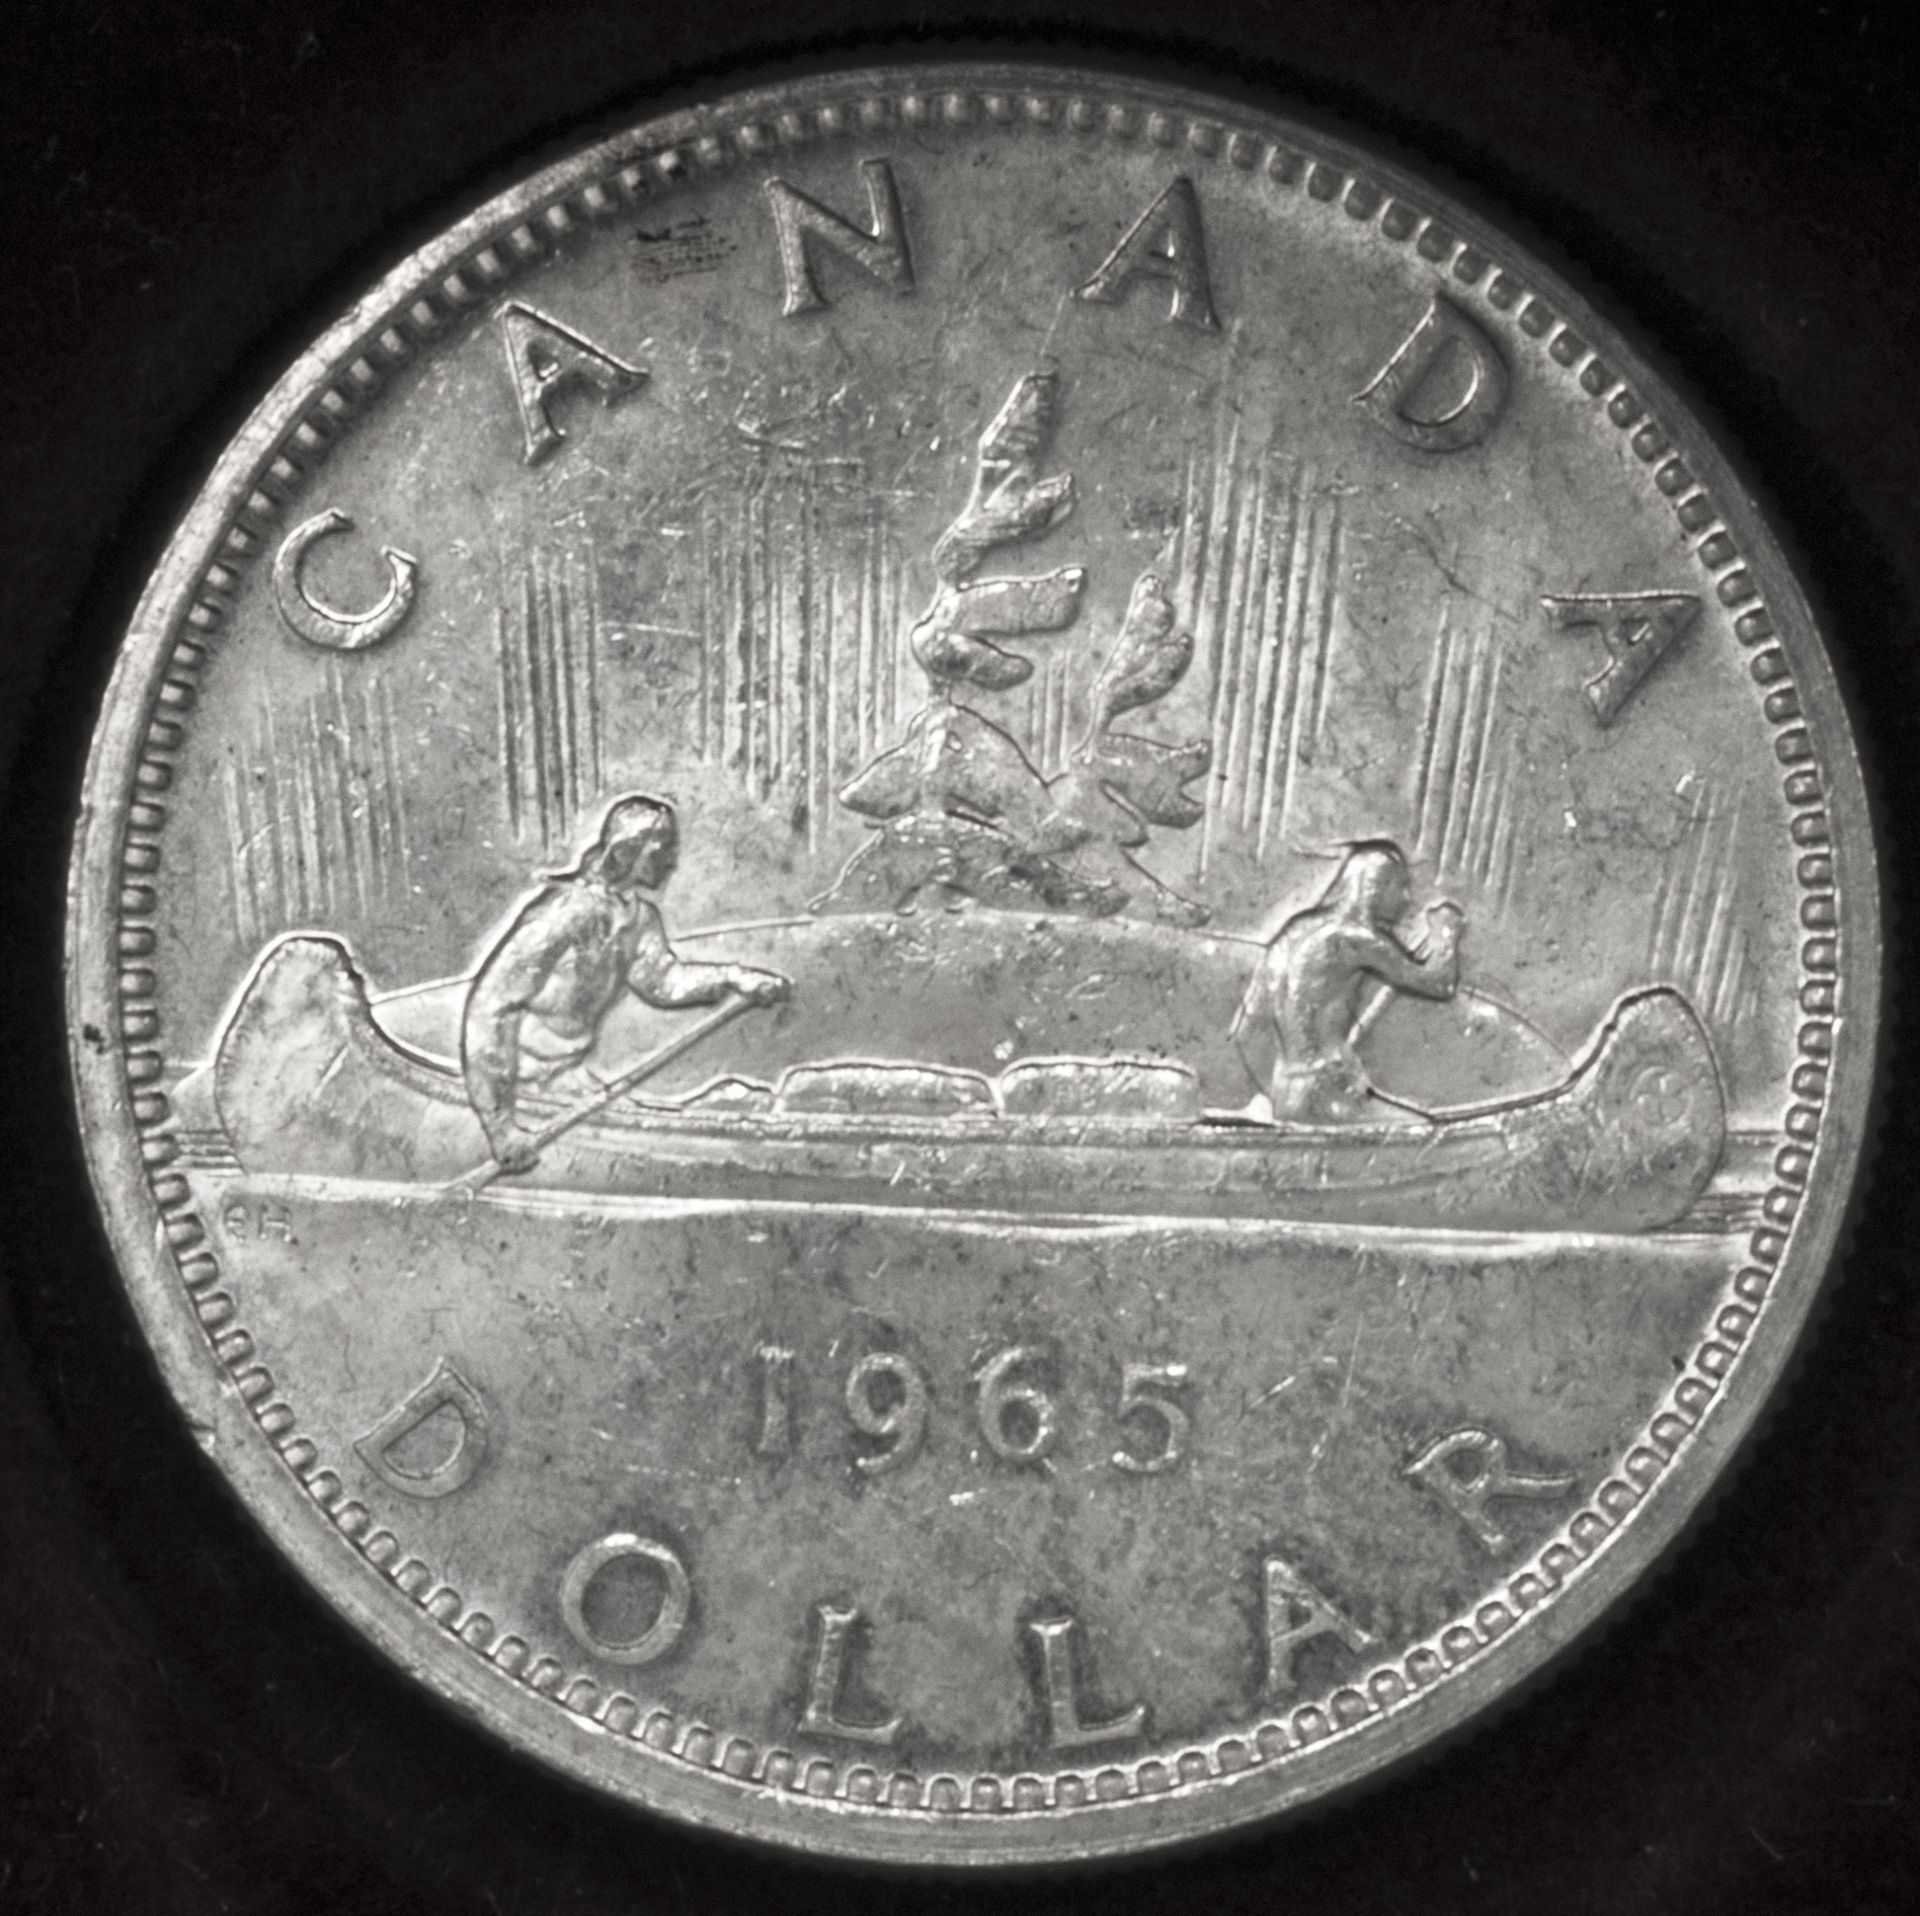 Kanada 1965, 1 Dollar "Kanu", Silber. Erhaltung: ss.